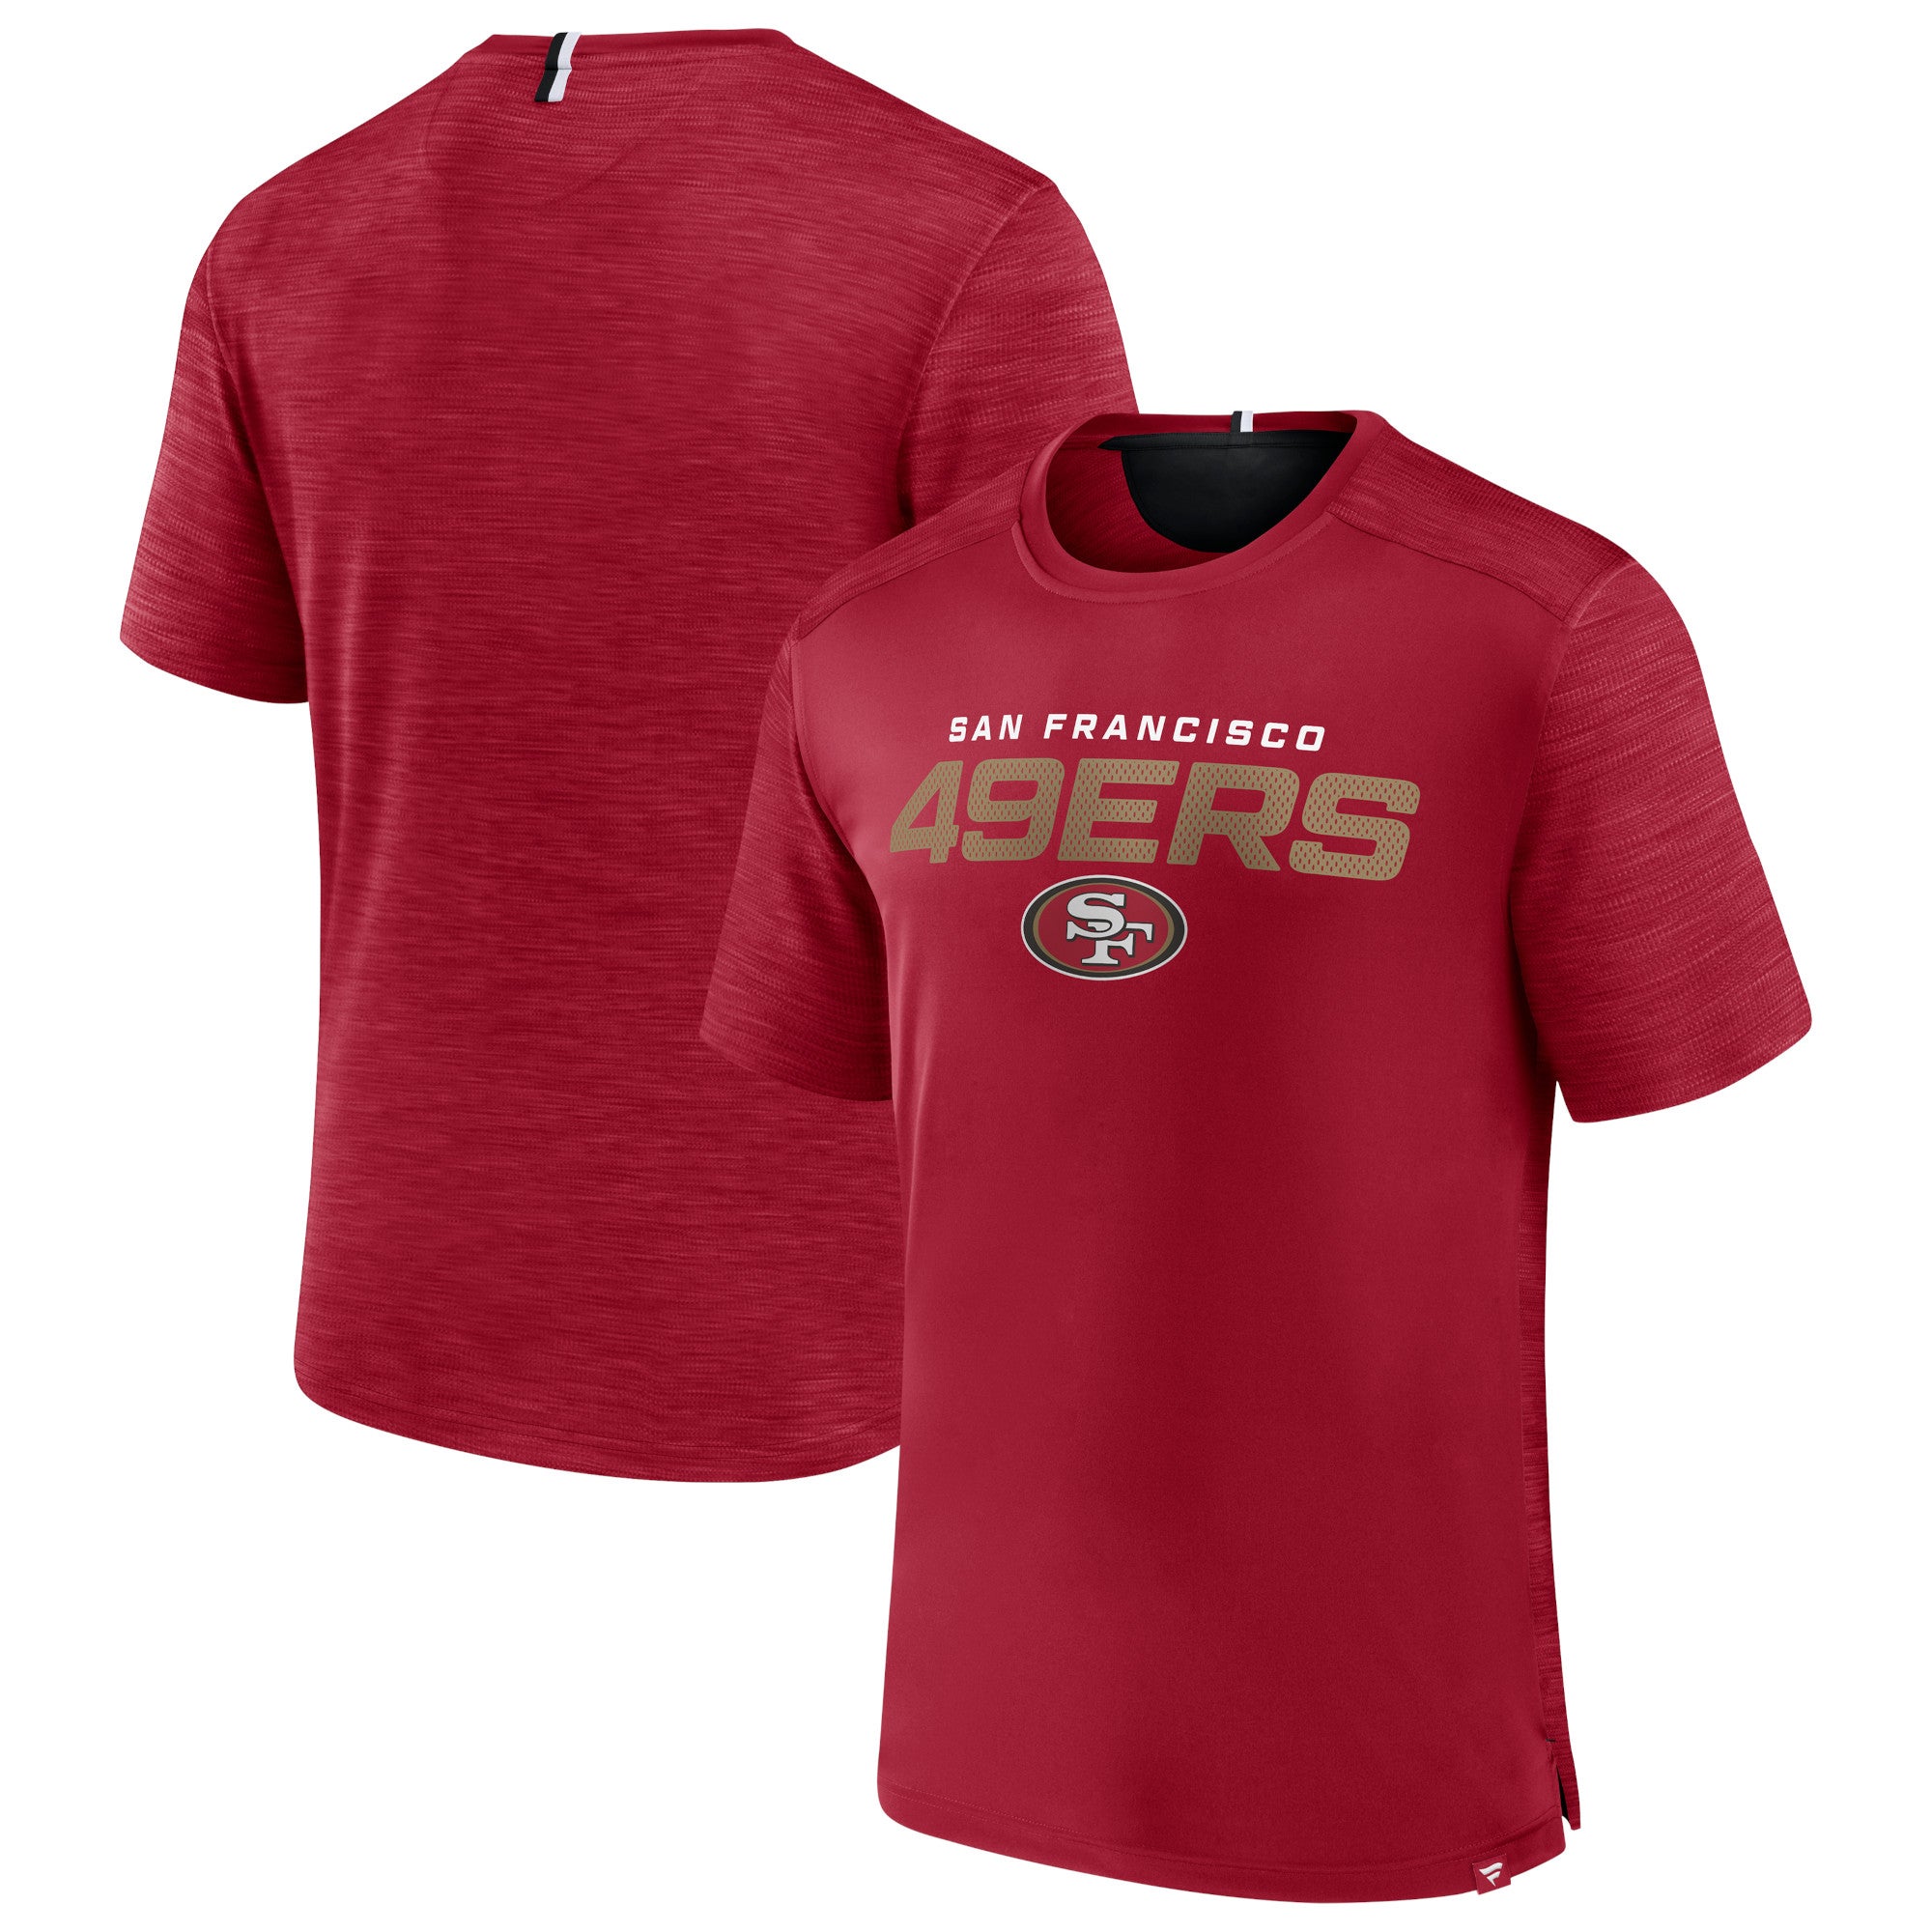 Fanatics 49ers Defender Evo T-Shirt